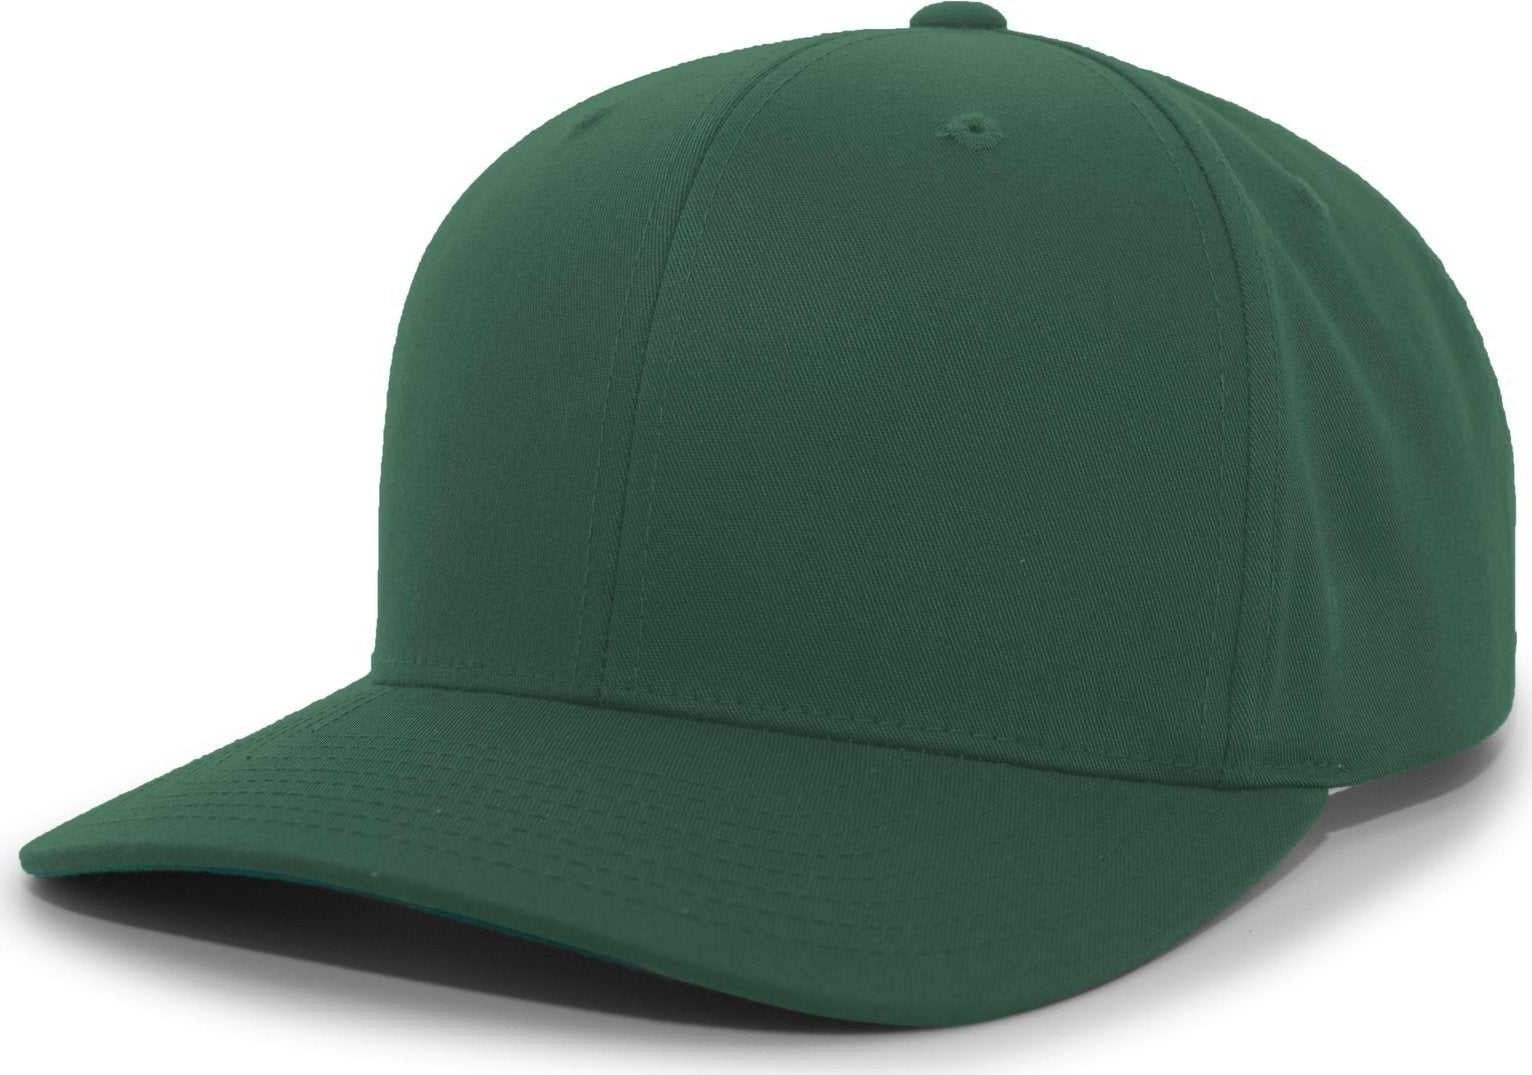 Pacific Headwear 302C Cotton Blend Hook-and-Loop Cap - Dark Green